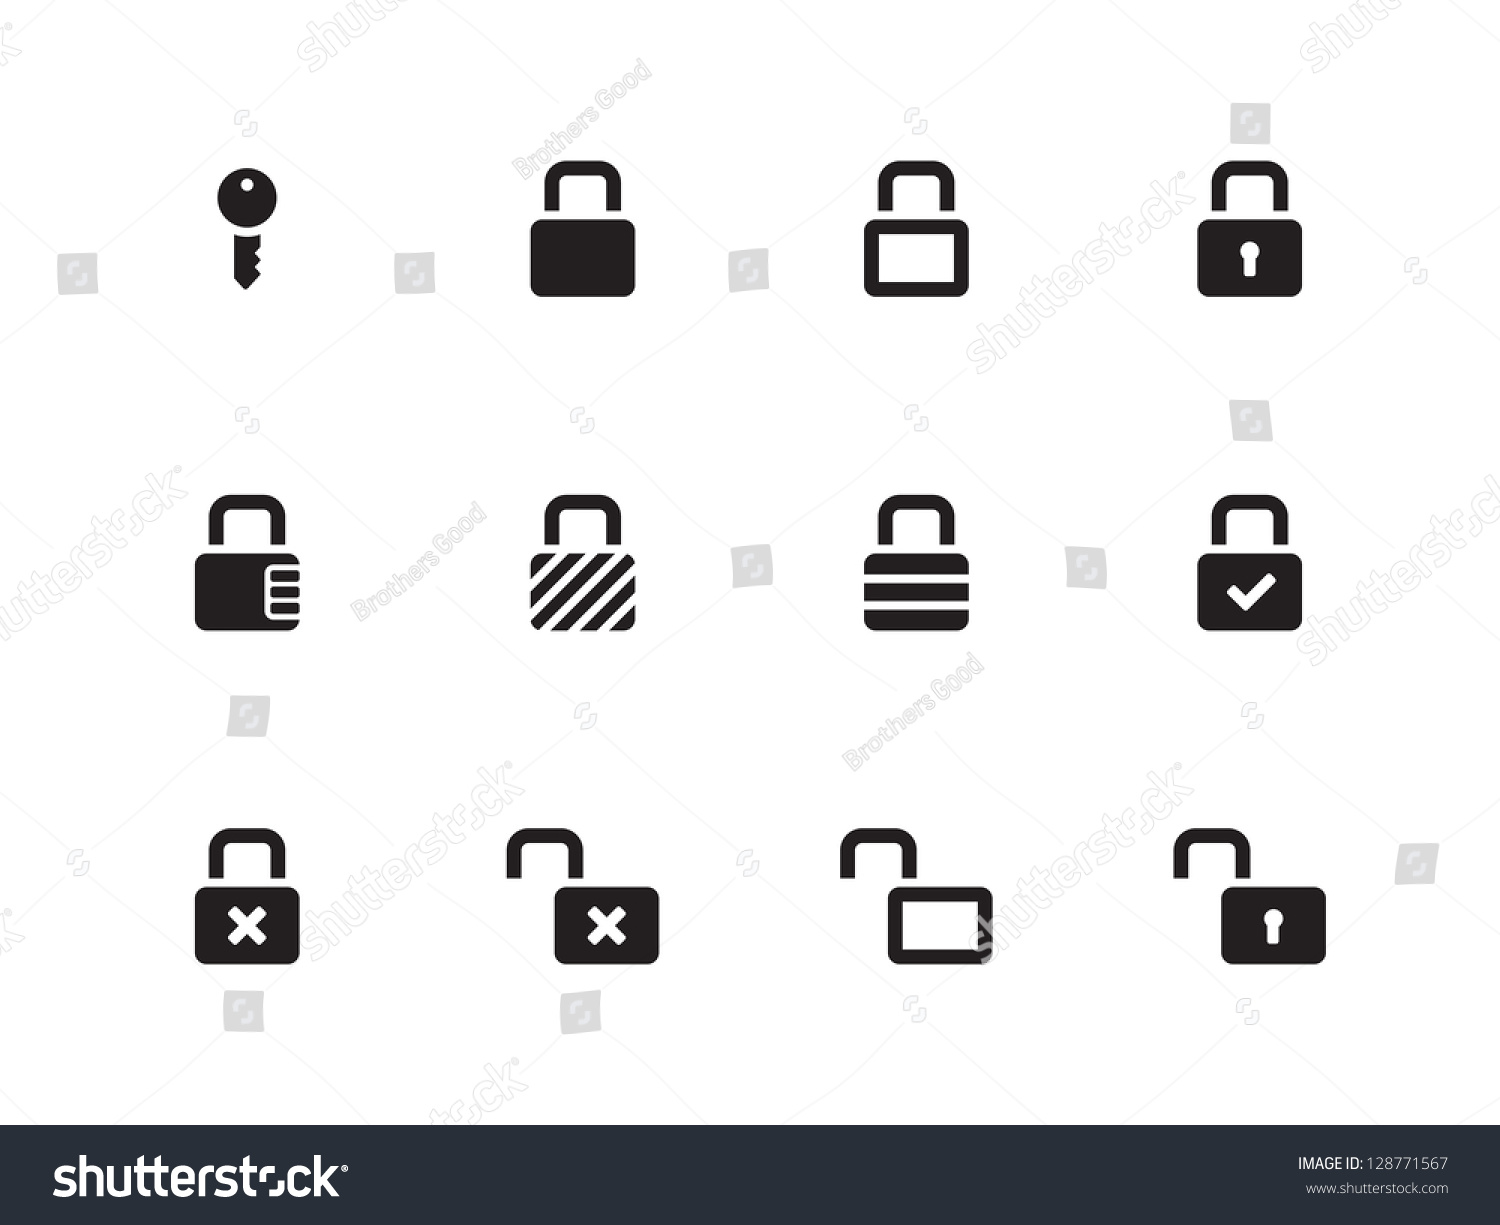 SVG of Locks Icons on white background. Vector illustration. svg